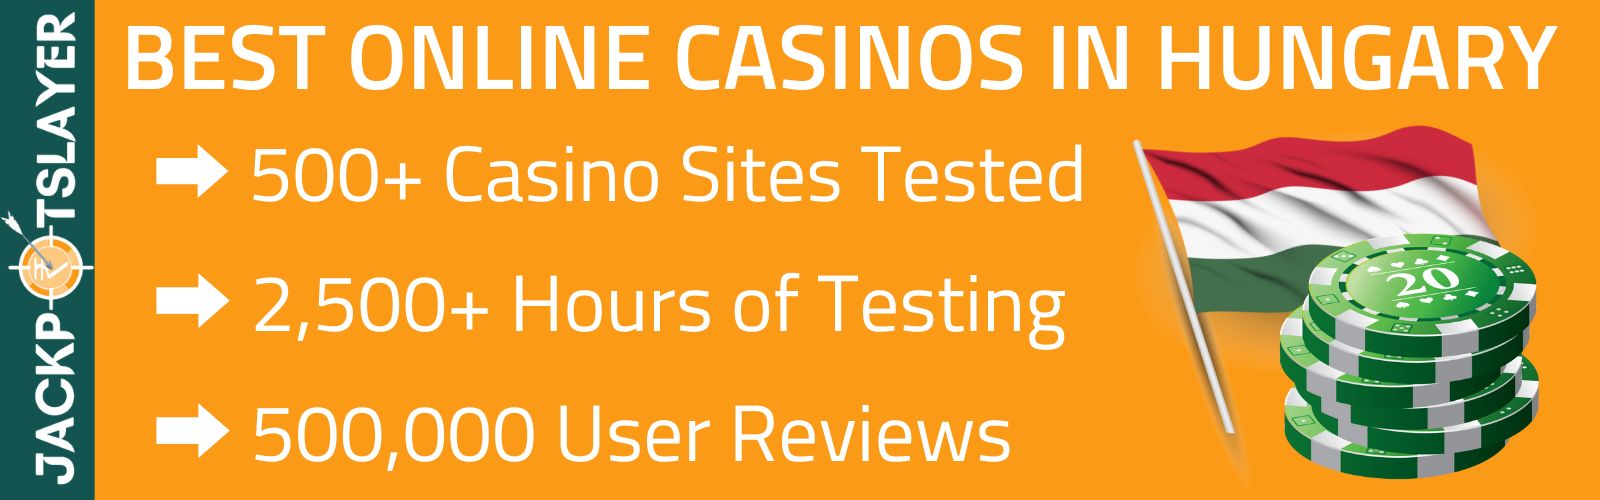 Best Online Casinos Hungary